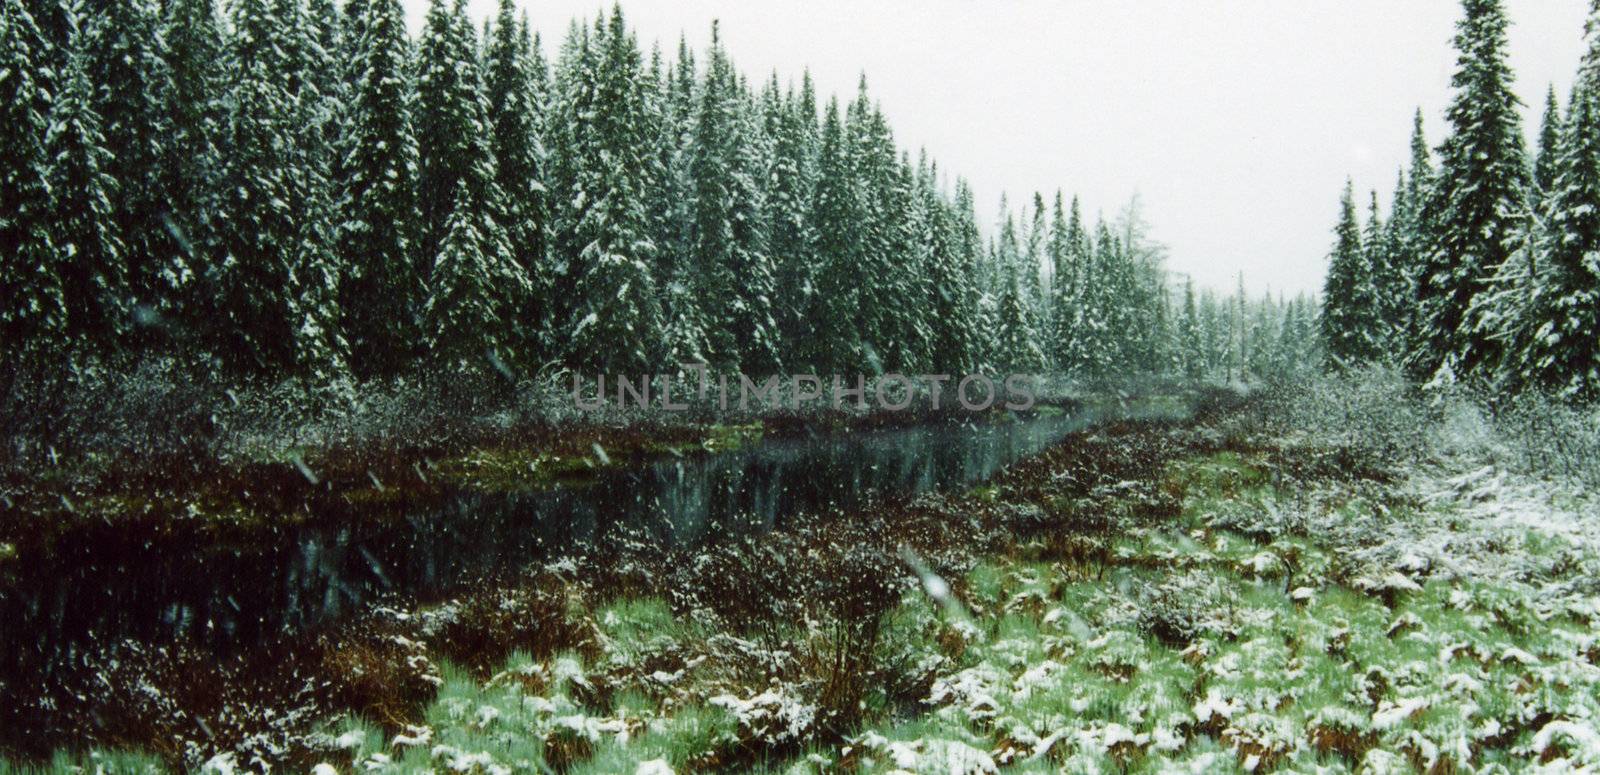 winter creek by northwoodsphoto